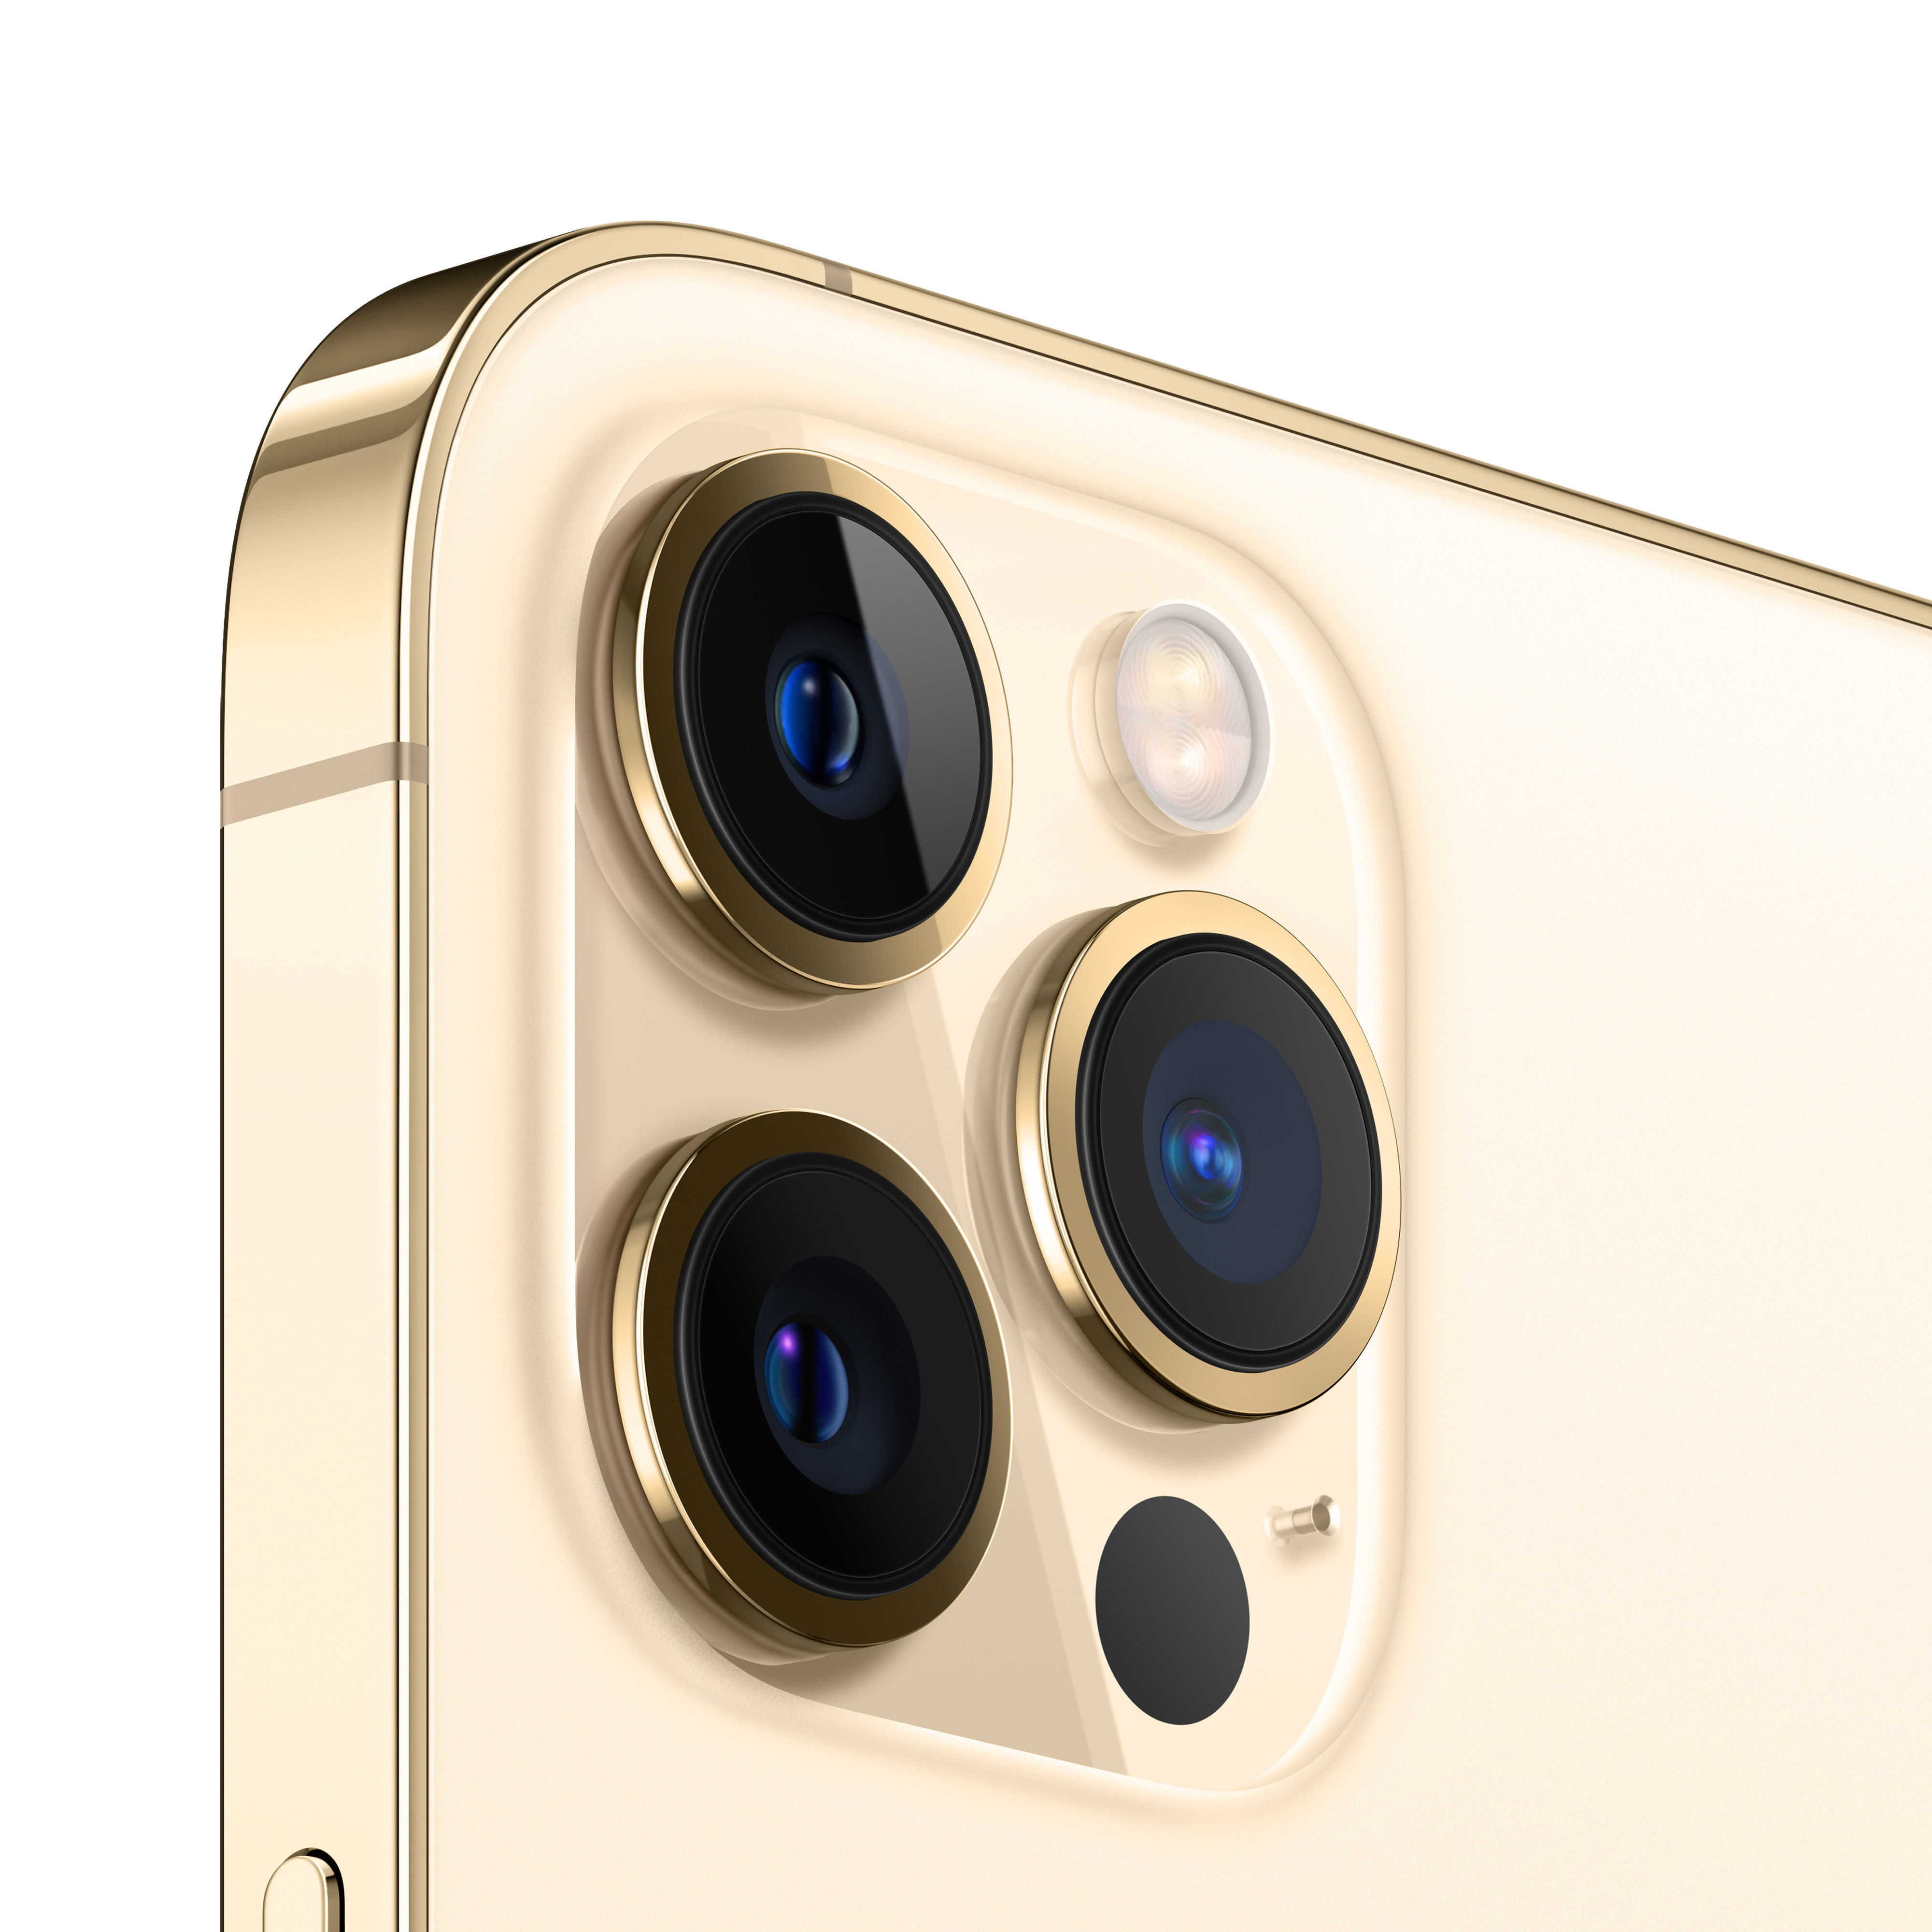 12 SIM Dual Max APPLE iPhone Gold GB Pro 512